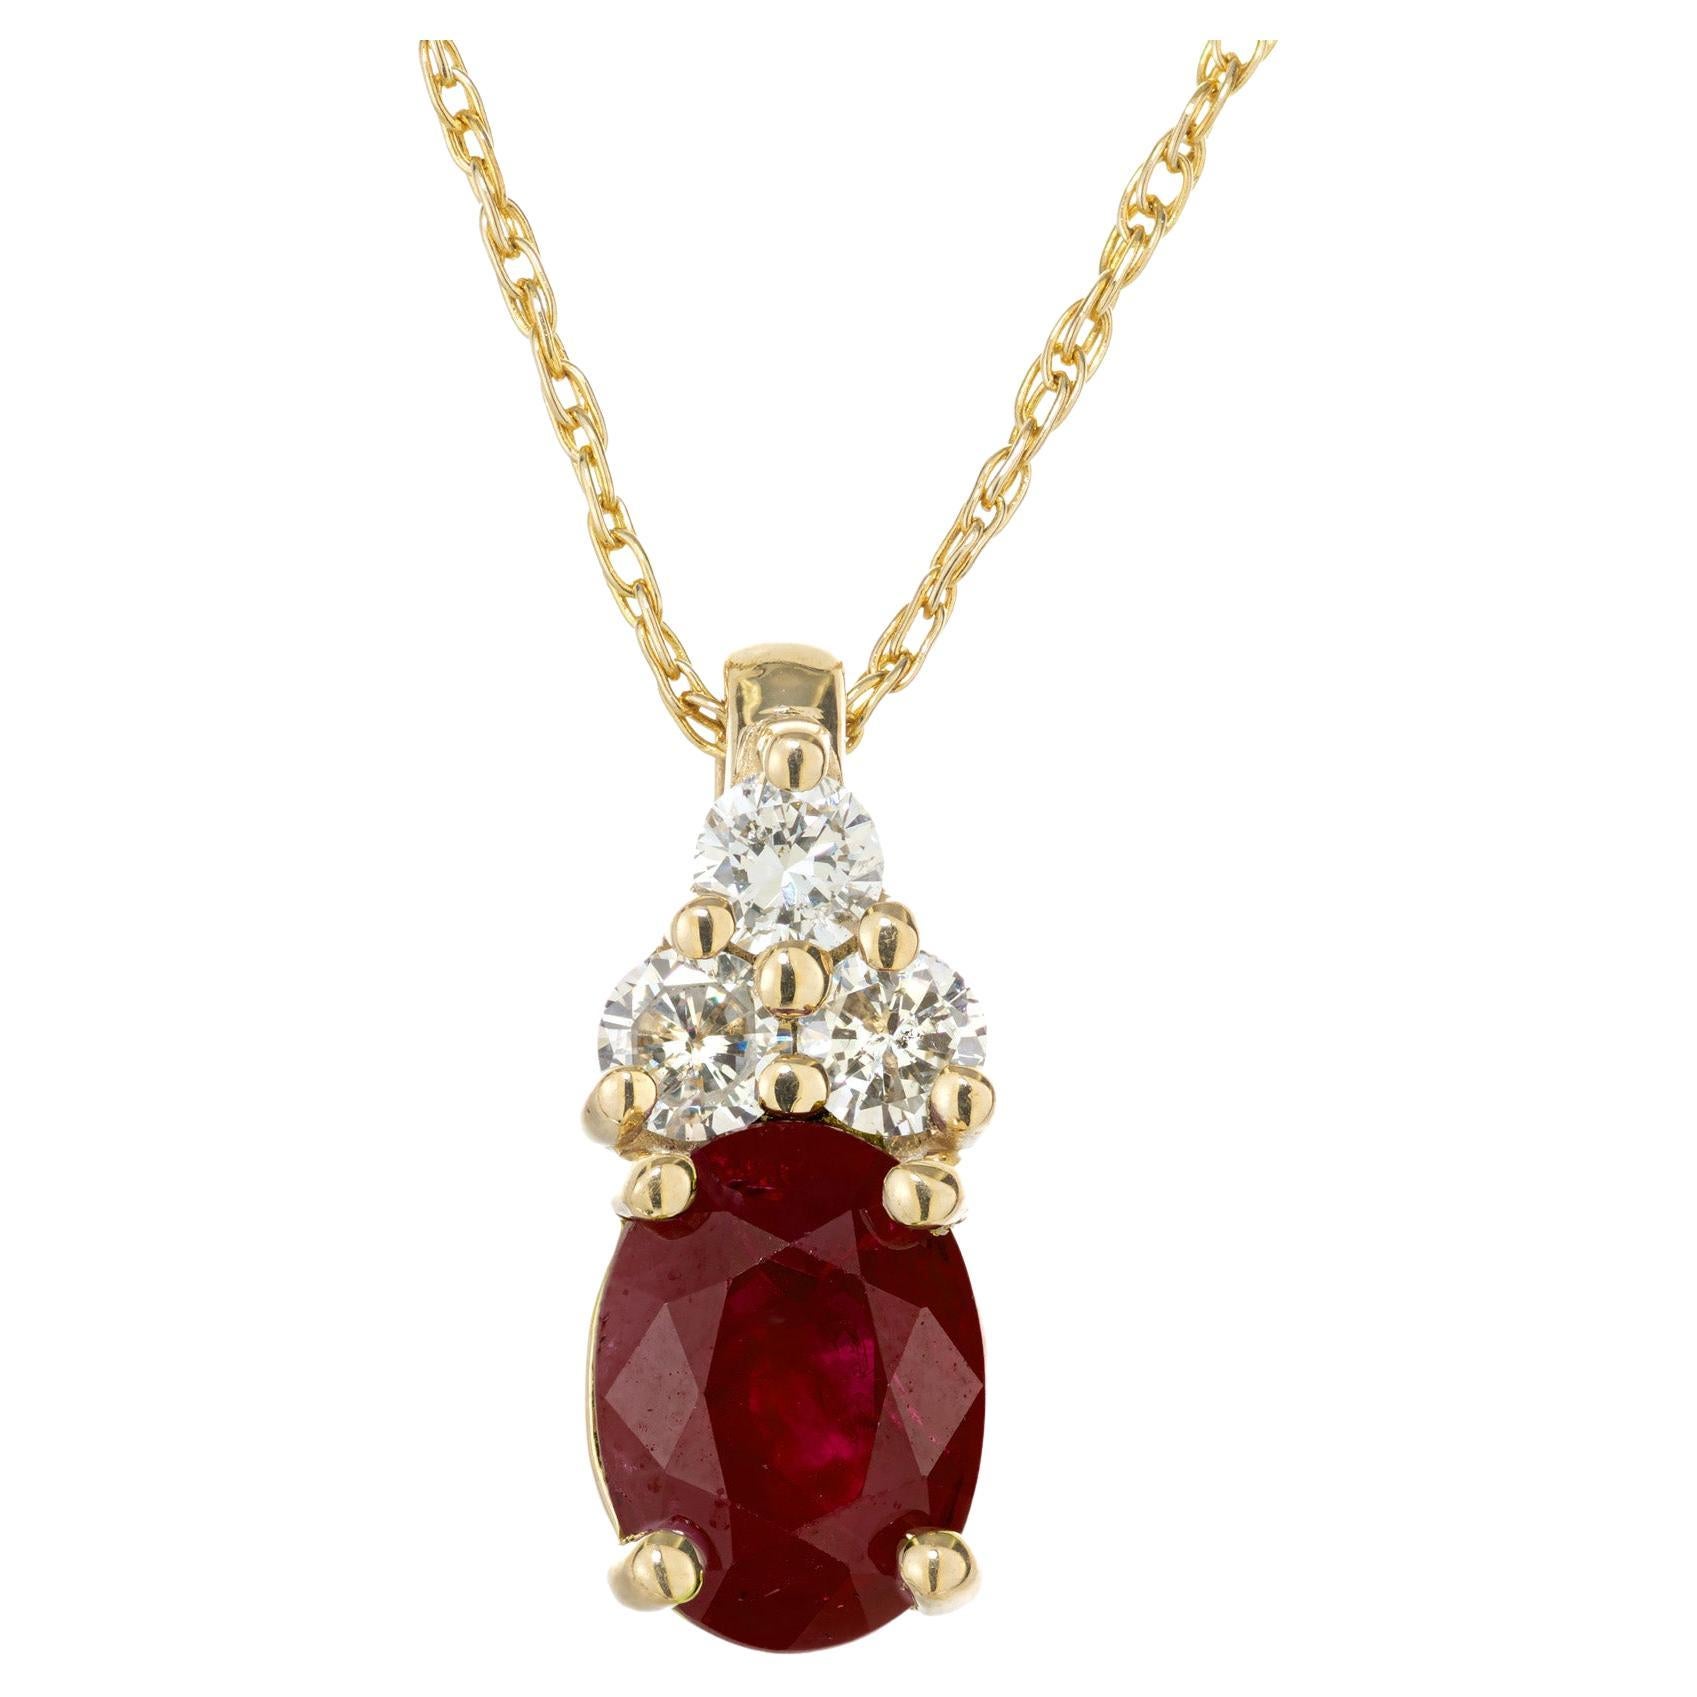 GIA Certified 1.14 Carat Burma Oval Ruby Diamond Yellow Gold Pendant Necklace